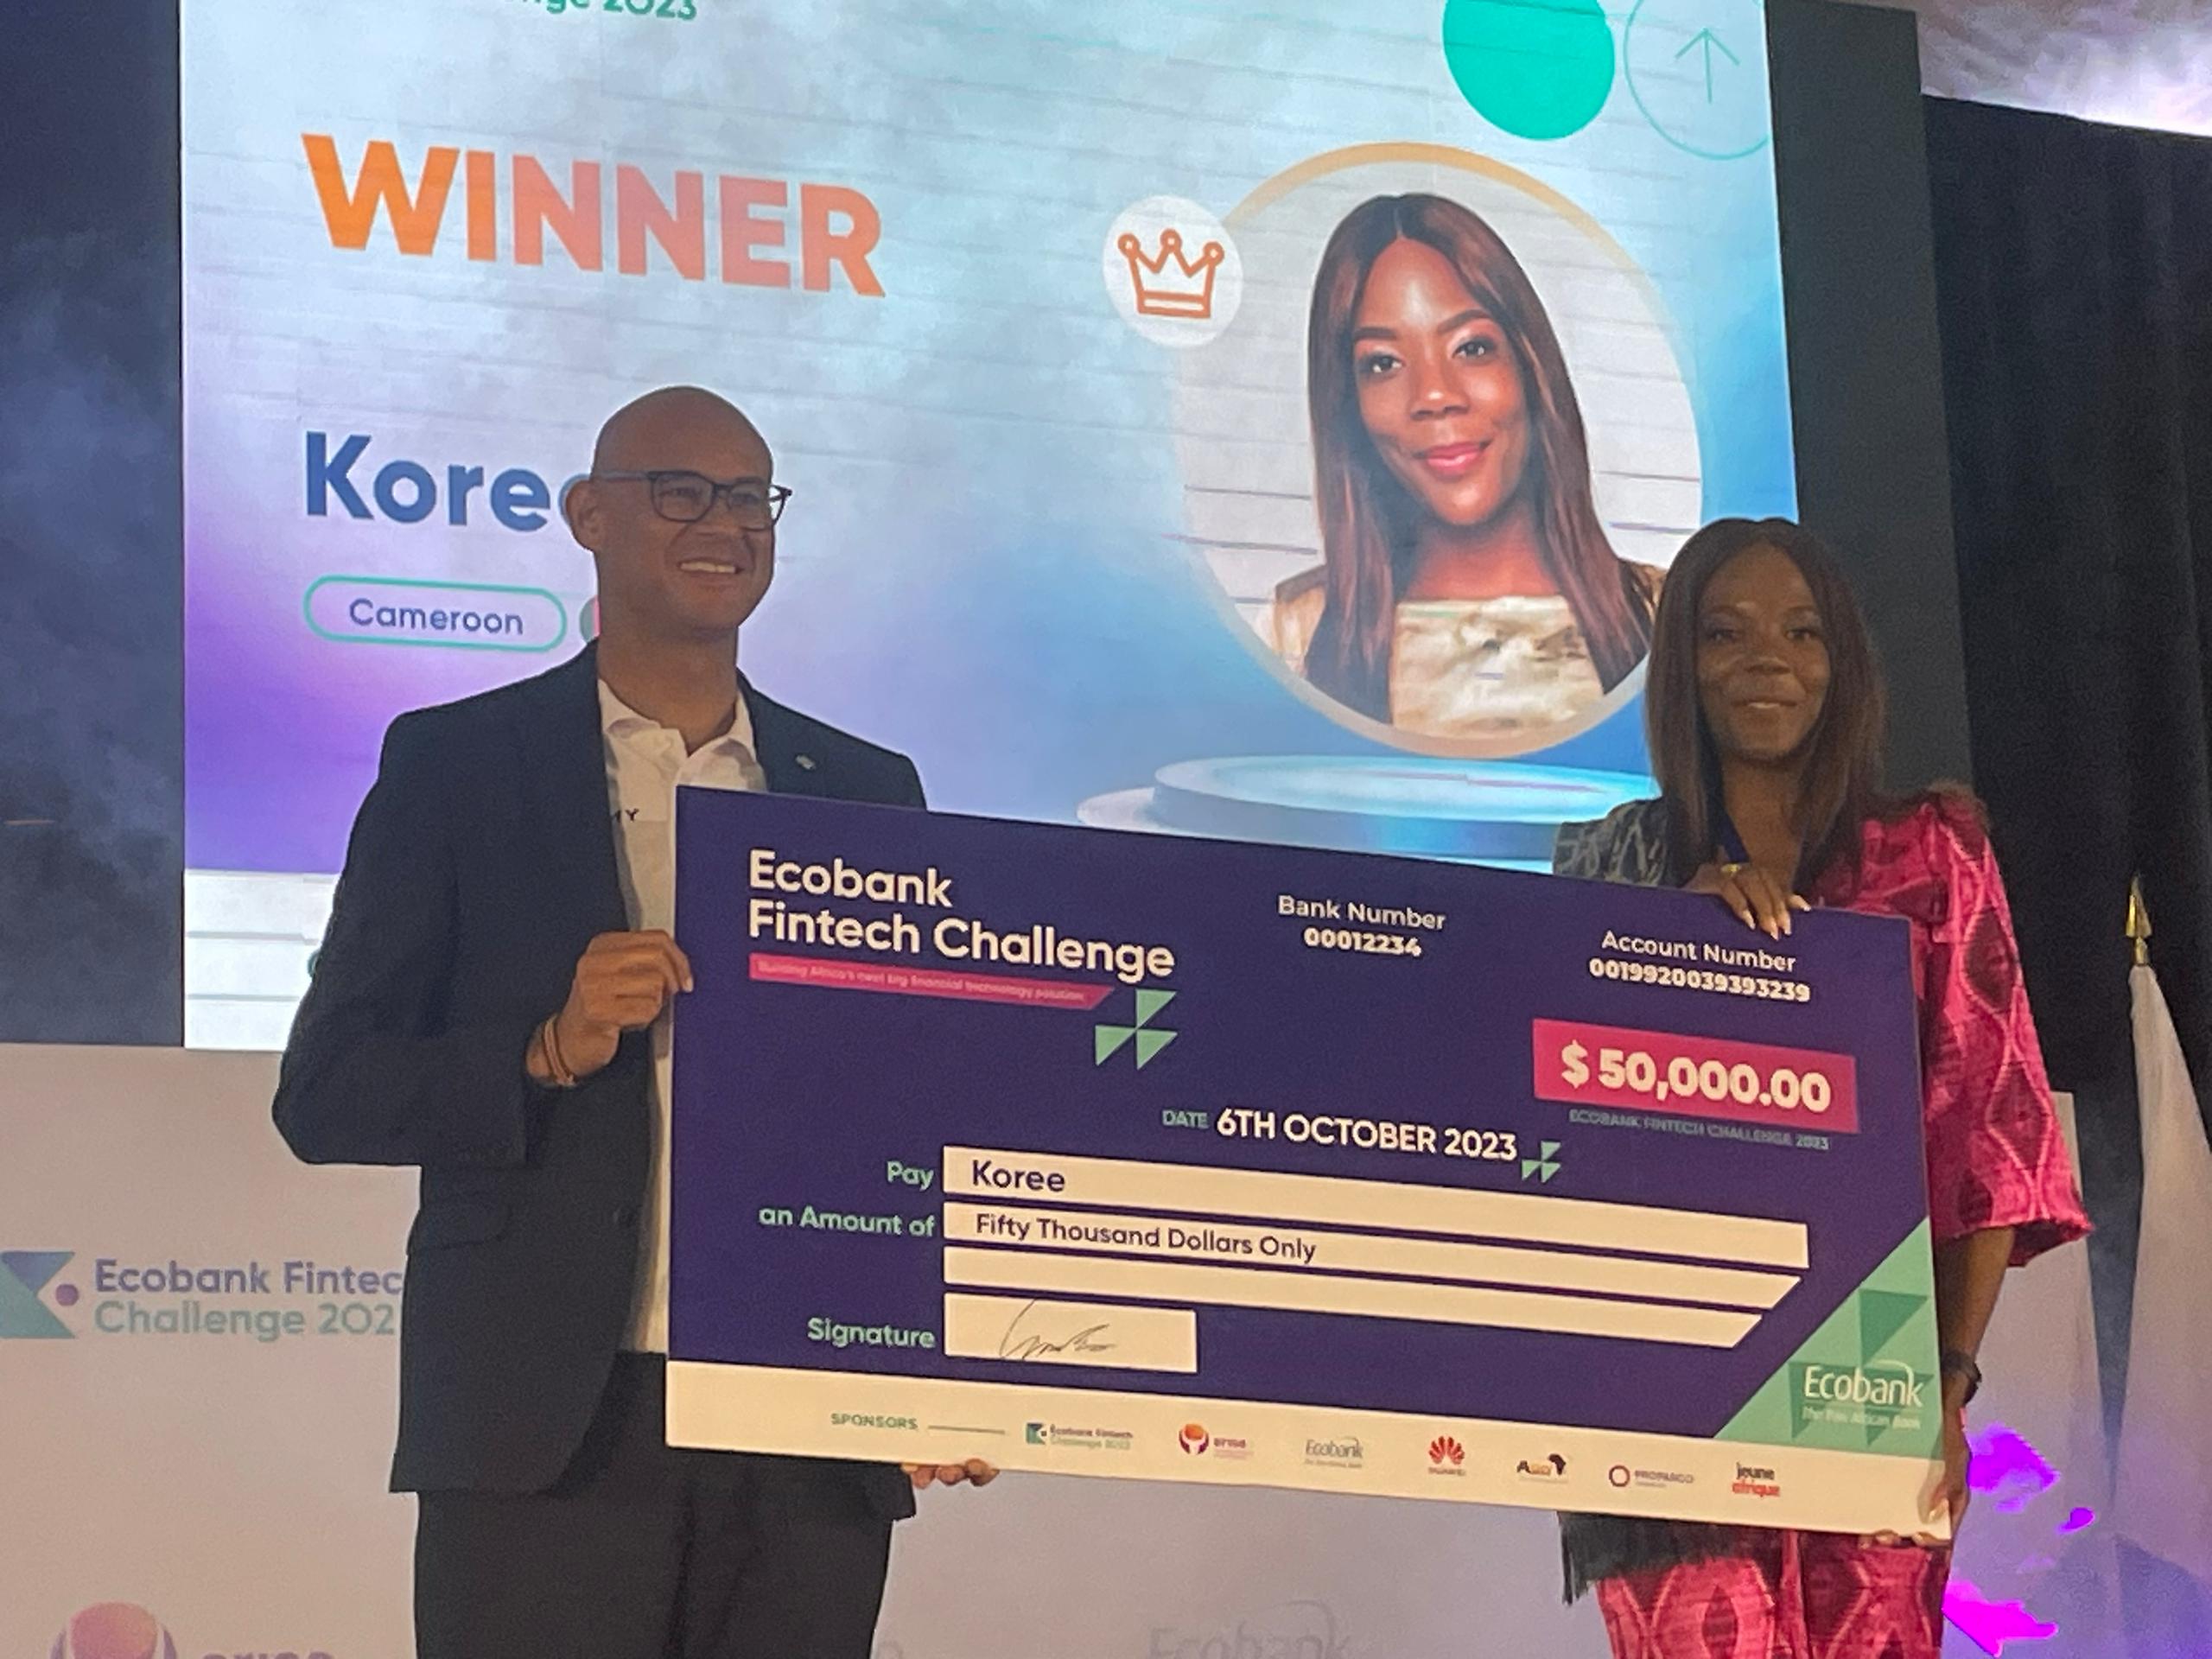 Koree wins at Ecobank's challenge